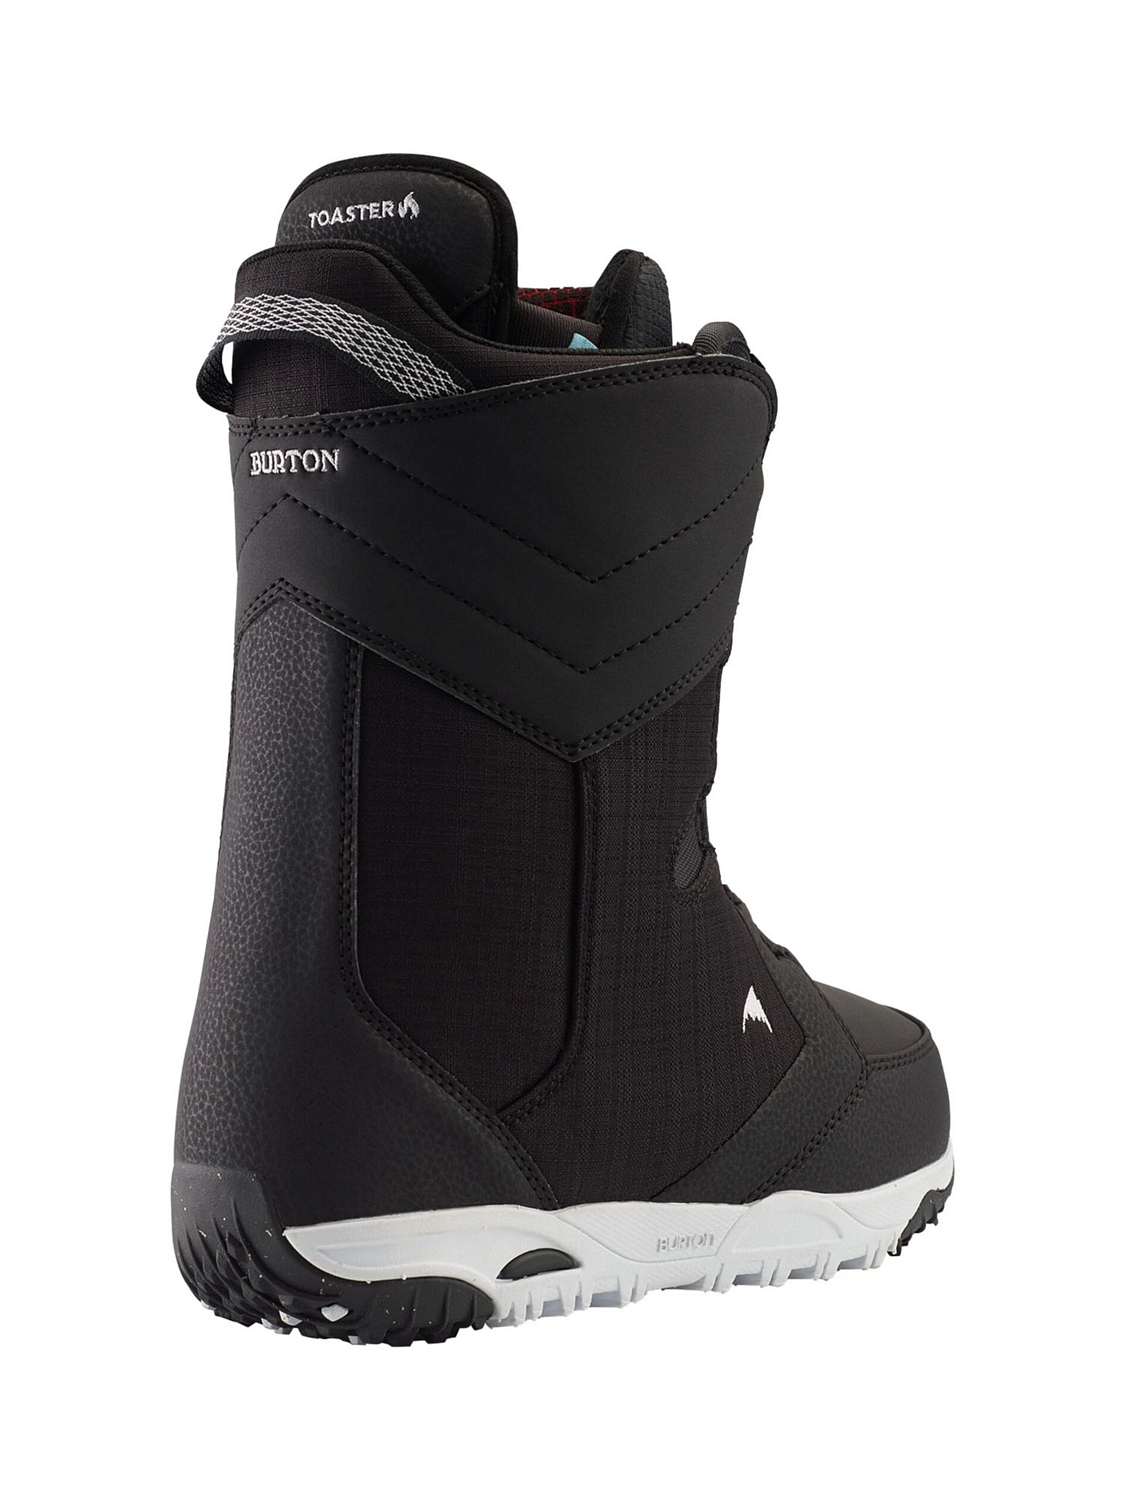 Ботинки для сноуборда BURTON Limelight Boa heat Black